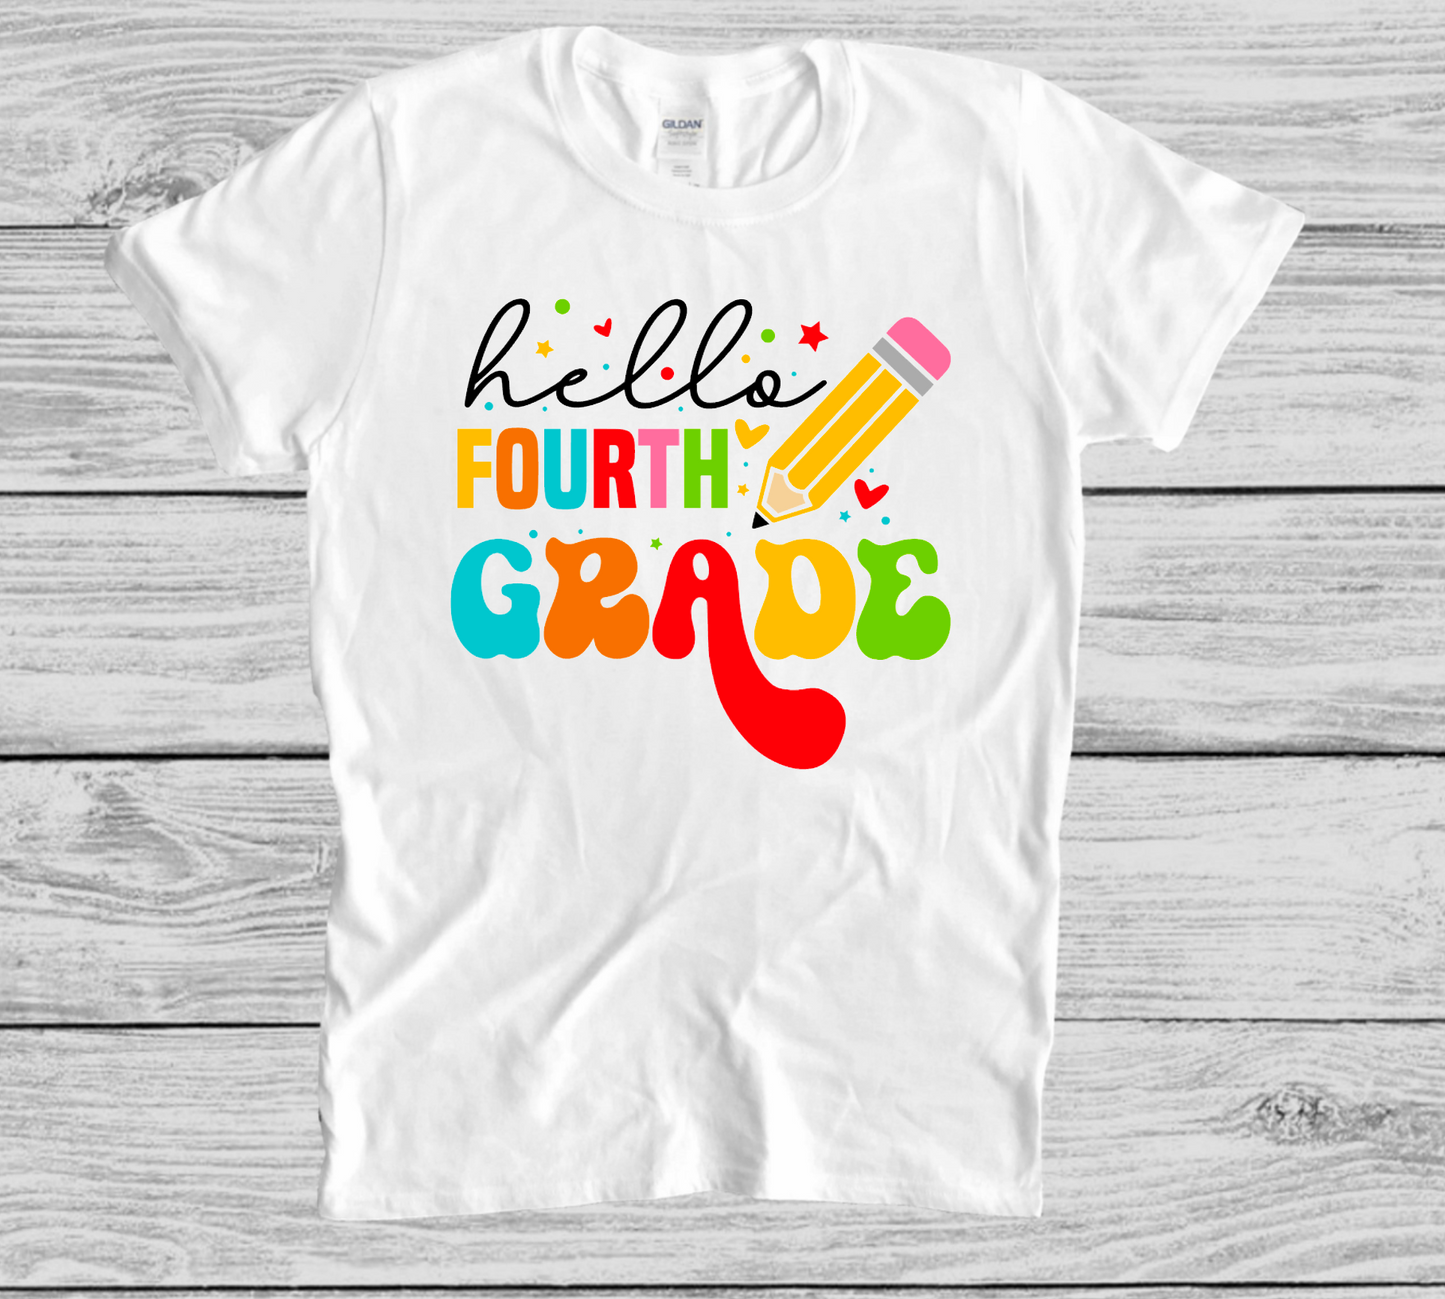 Hello Pre-K, Kindergarten, First Second Third Fourth Fifth Grade! || Printed Shirt